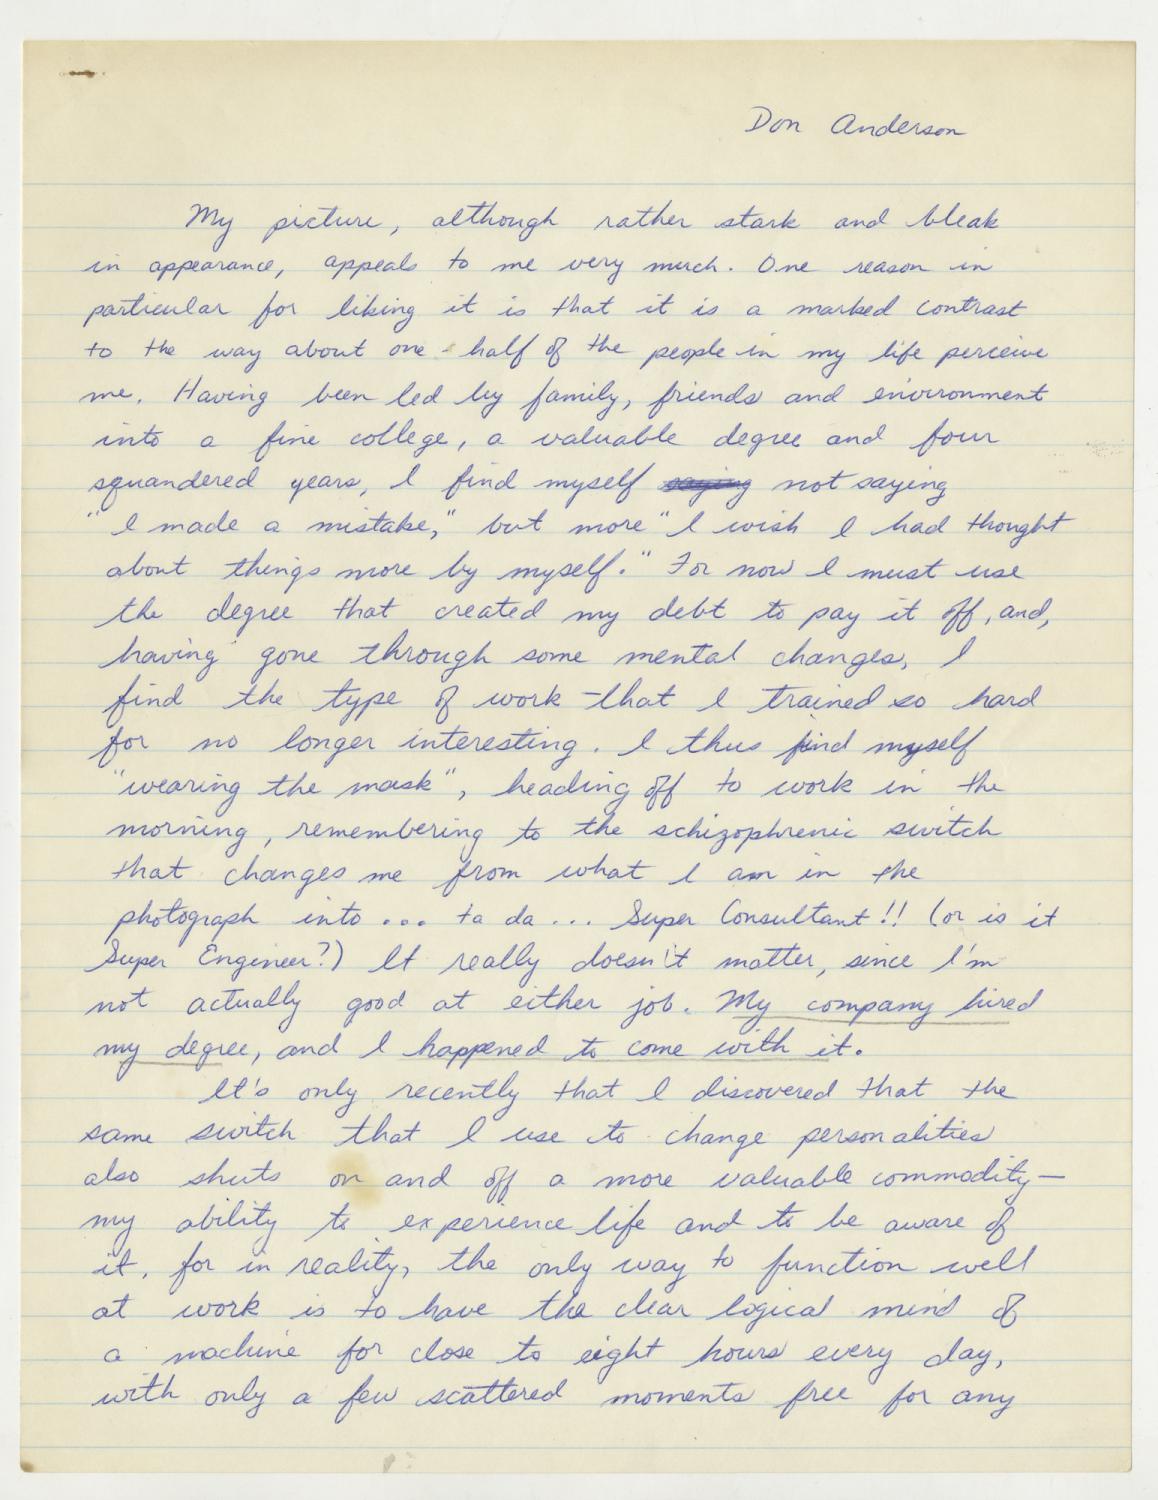 44 Irving Street - Don's Letter. 44 Irving Street, Cambridge, MA. 1971.